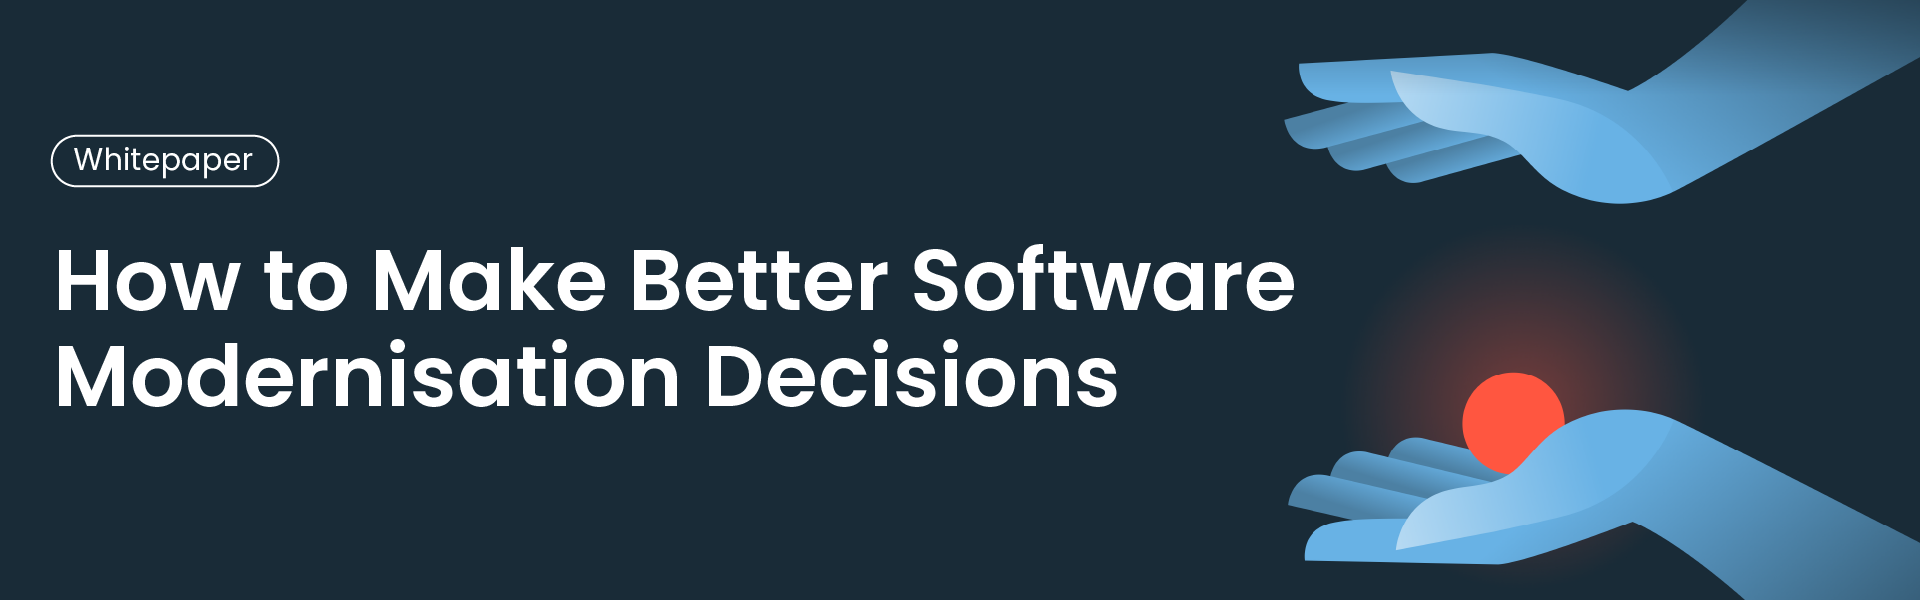 Software Modernisation Decisions Whitepaper_Hubspot Banner